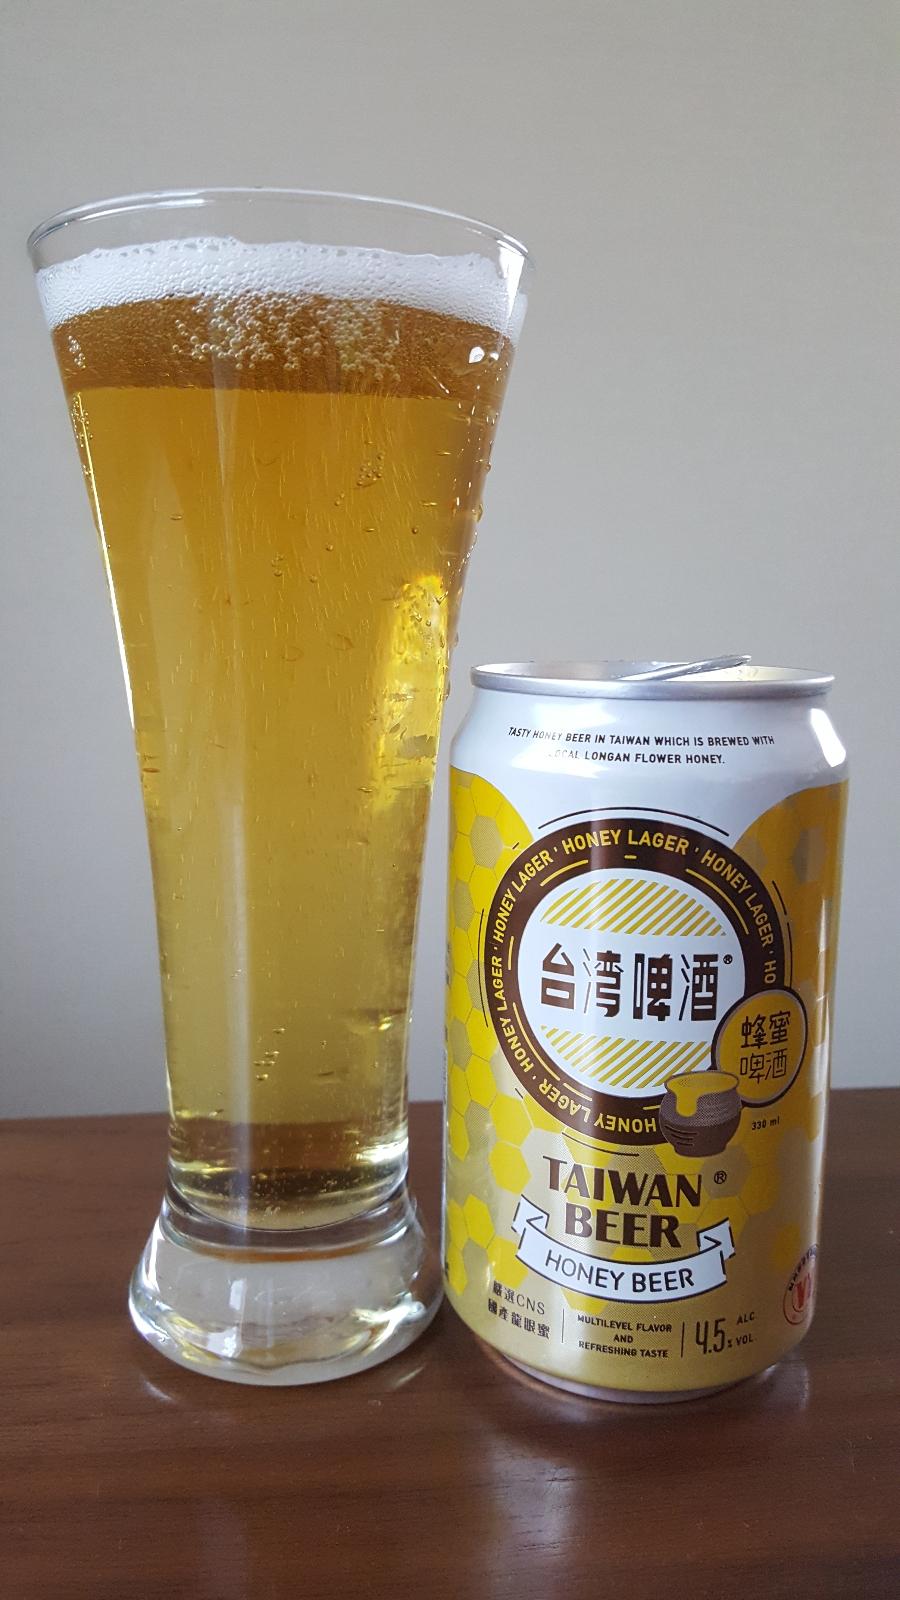 Taiwan Honey Beer